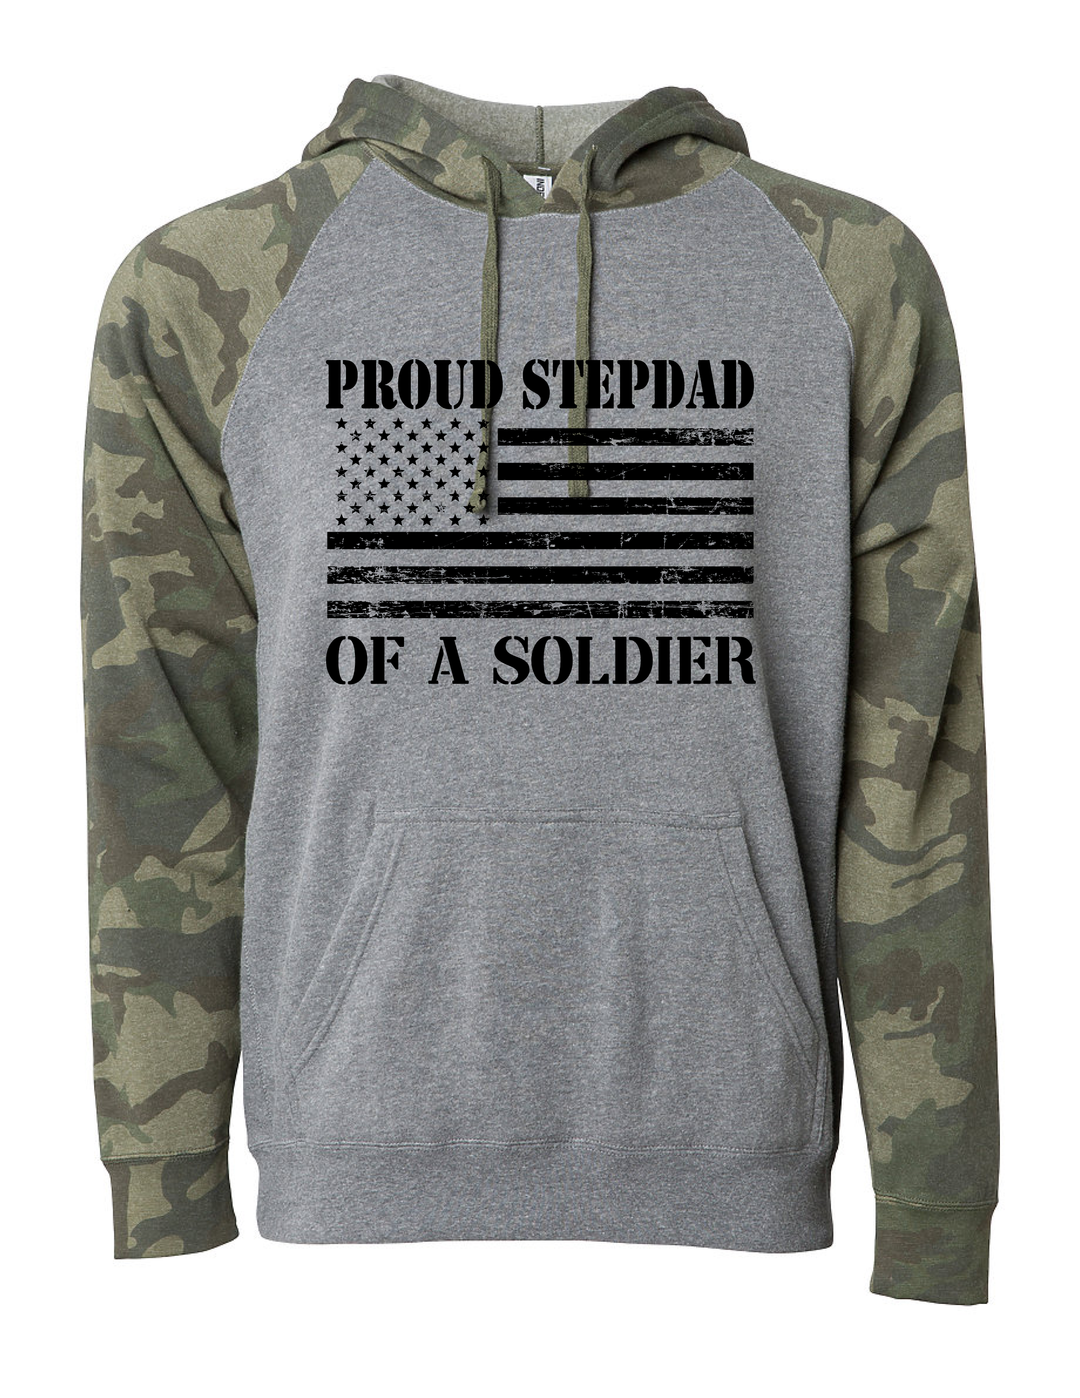 Proud Stepdad of a Soldier Camo Hoodie (Camo)